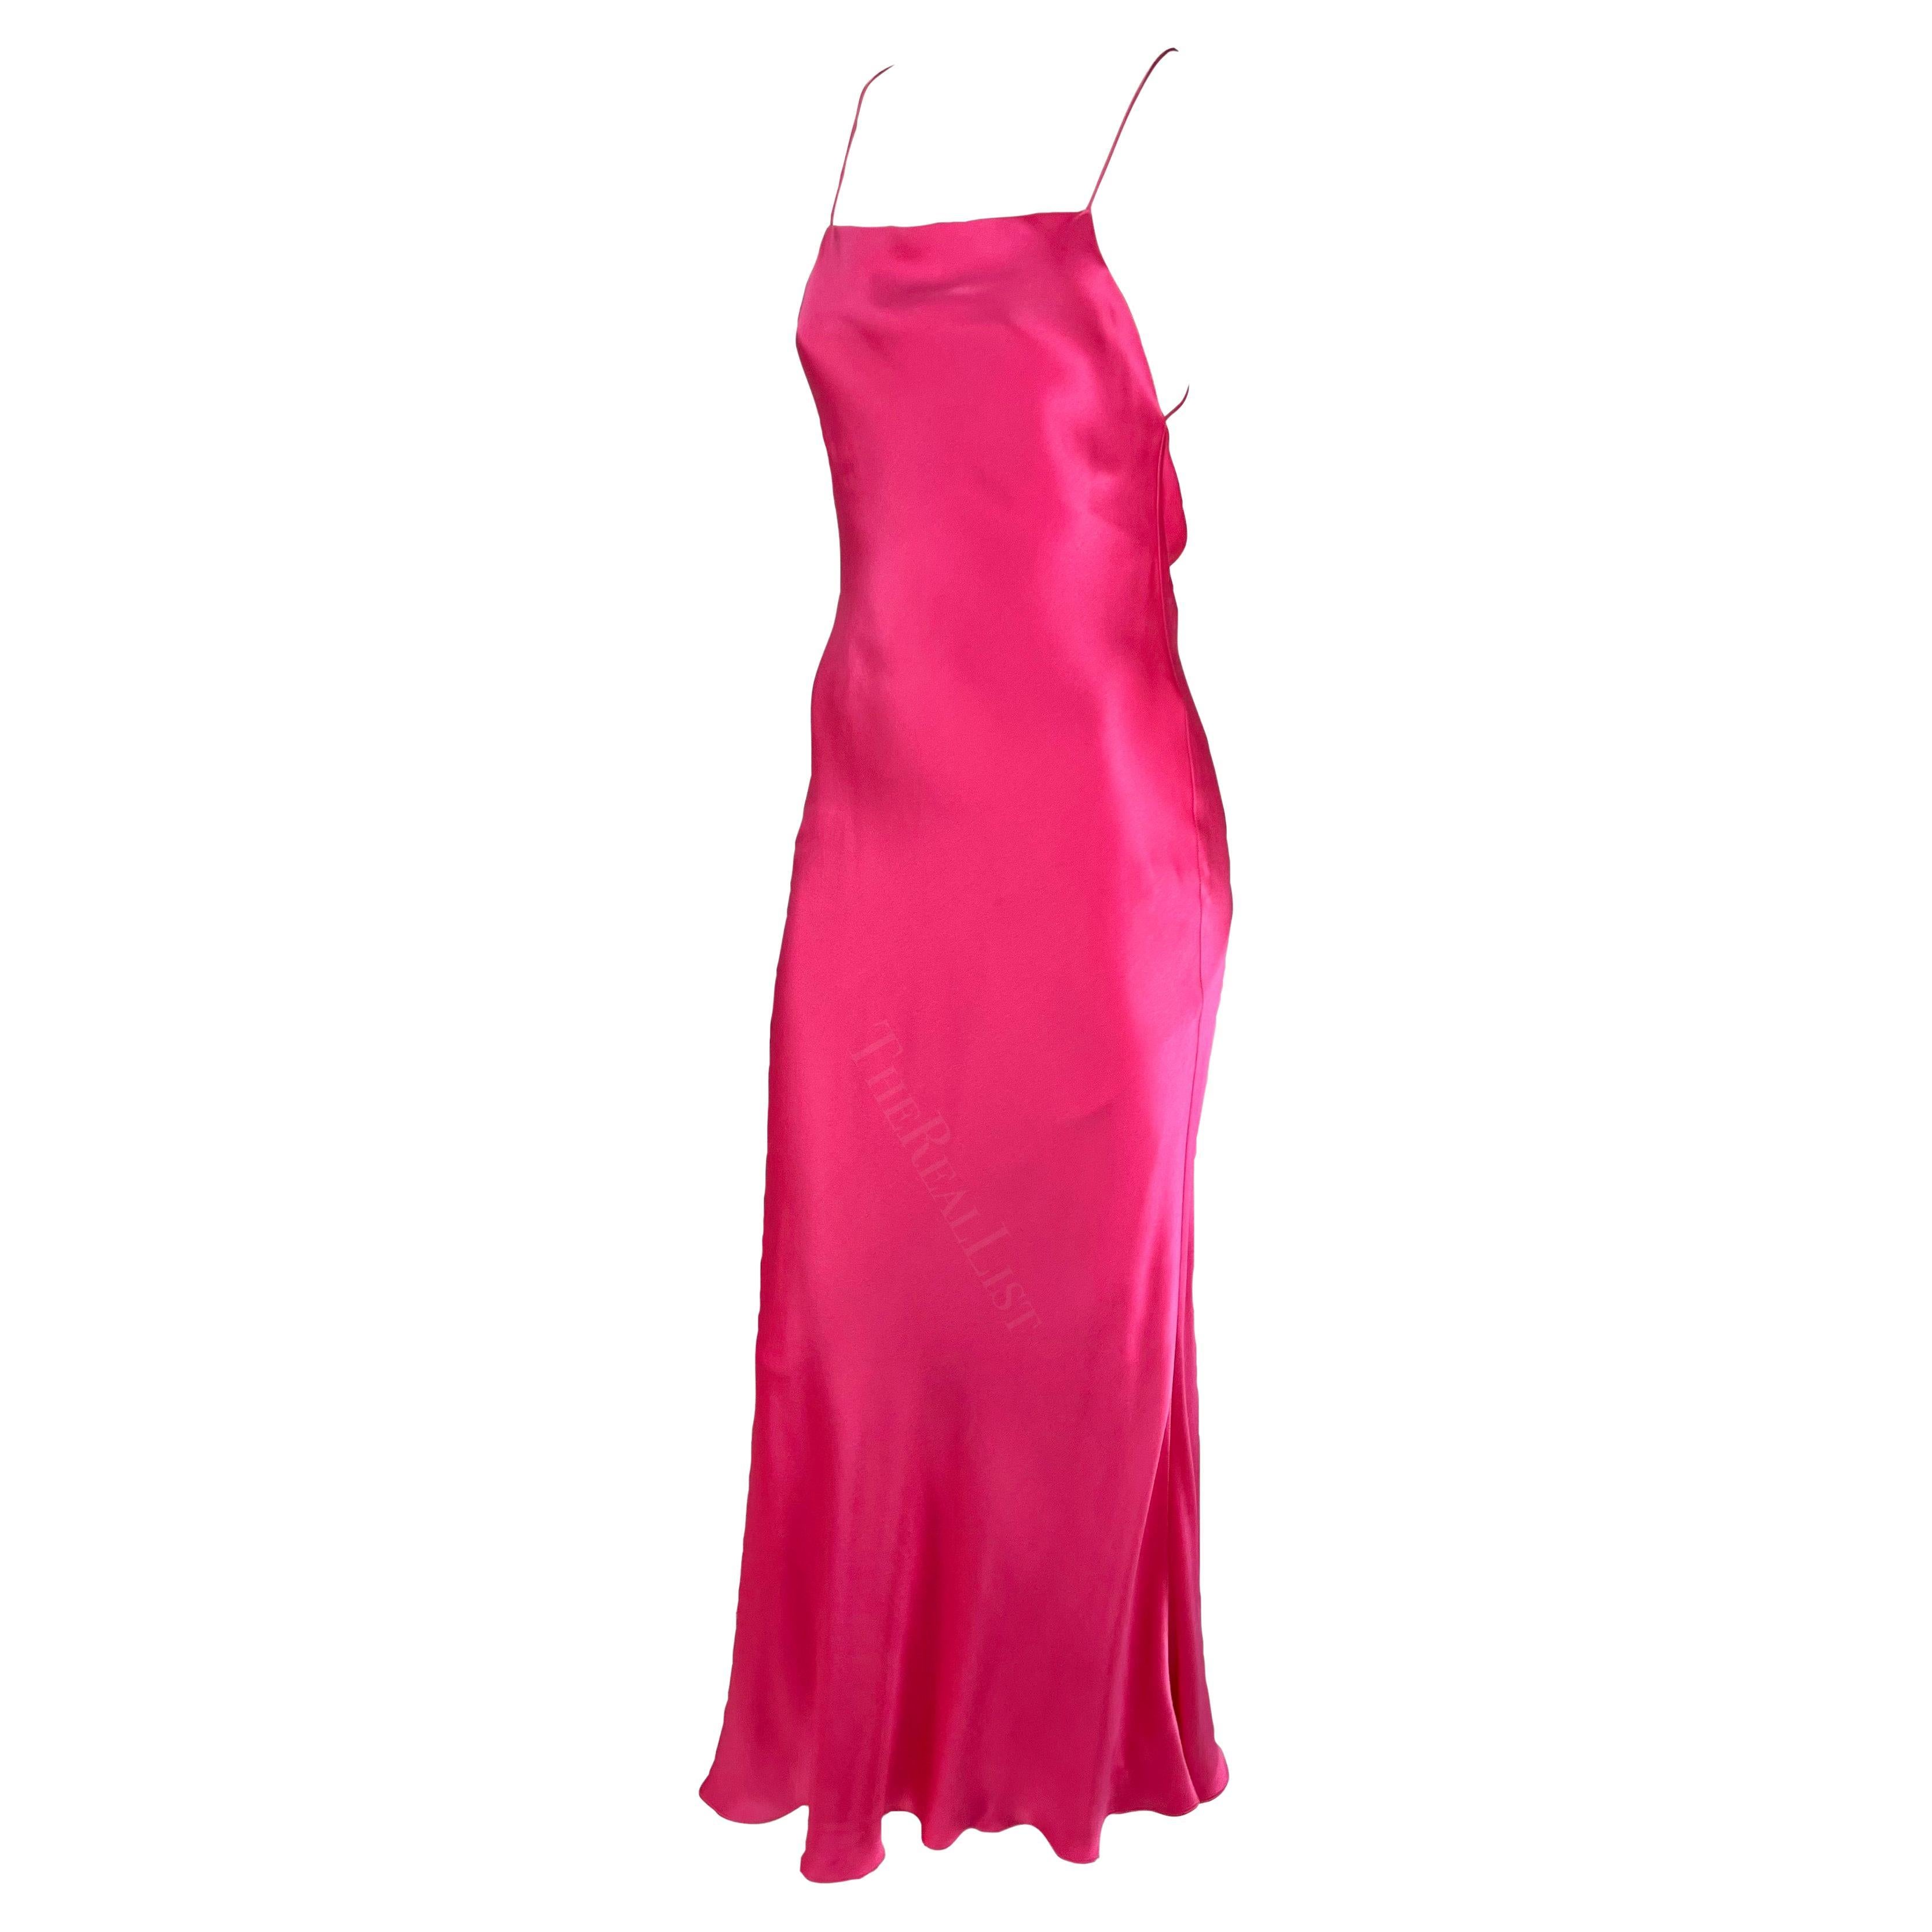 S/S 2004 Ralph Lauren Runway Hot Pink Silk Satin Backless Slip Gown  For Sale 2